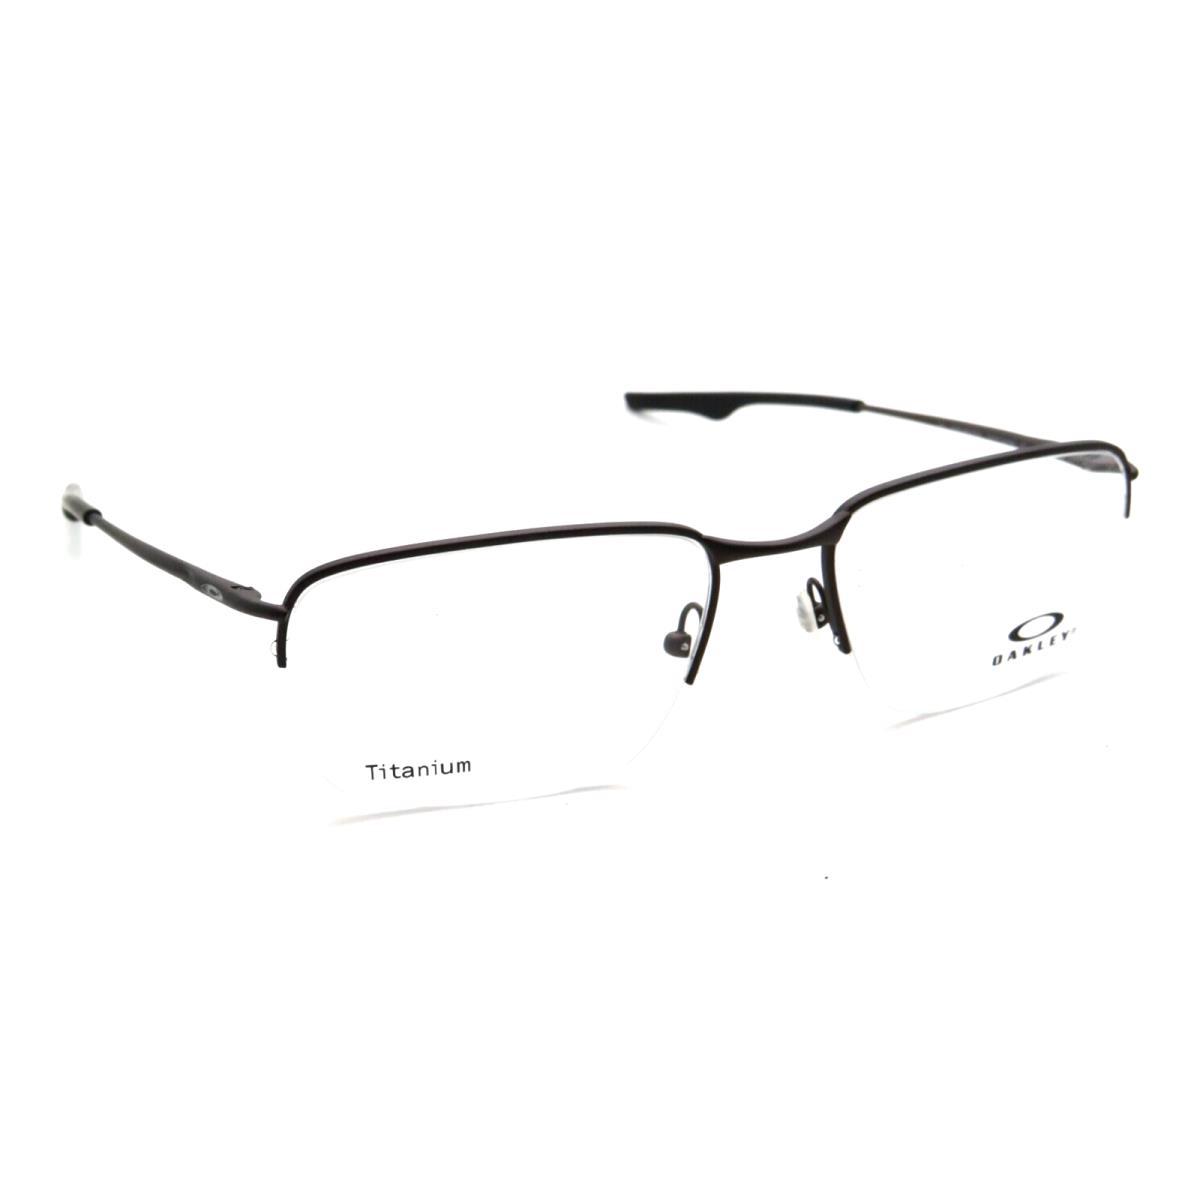 Oakley Eyeglasses Wingback SQ OX5148-0156 56-18 Titanium Matte Black Frames - Frame: Black, Lens: